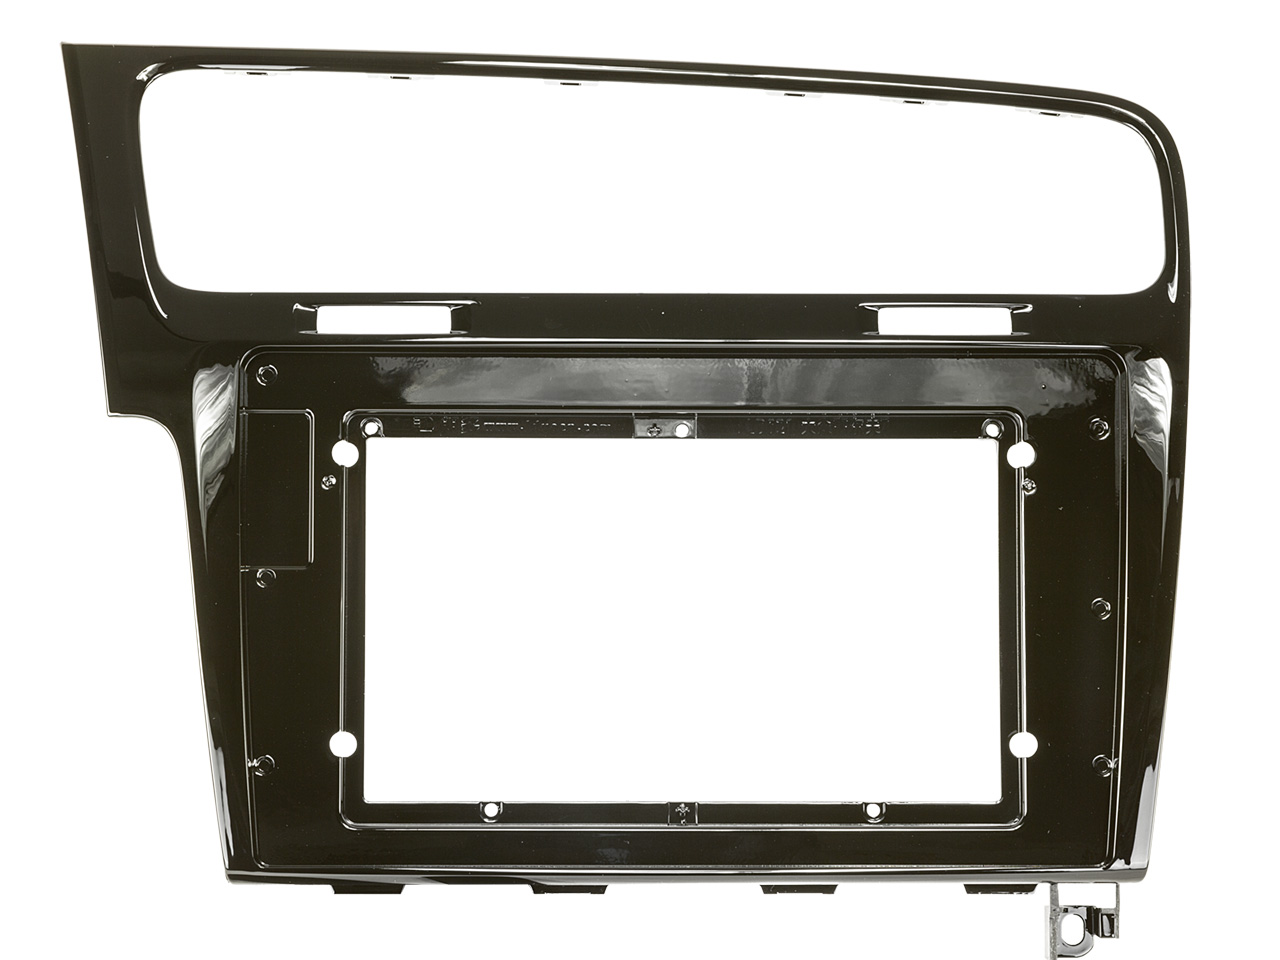 ZENEC Z-E1010 2-DIN Autoradio Infotainer kompatibel mit Volkswagen VW Golf VII (MKI) AU 2012 > 2017 - Rahmenfarbe Piano black